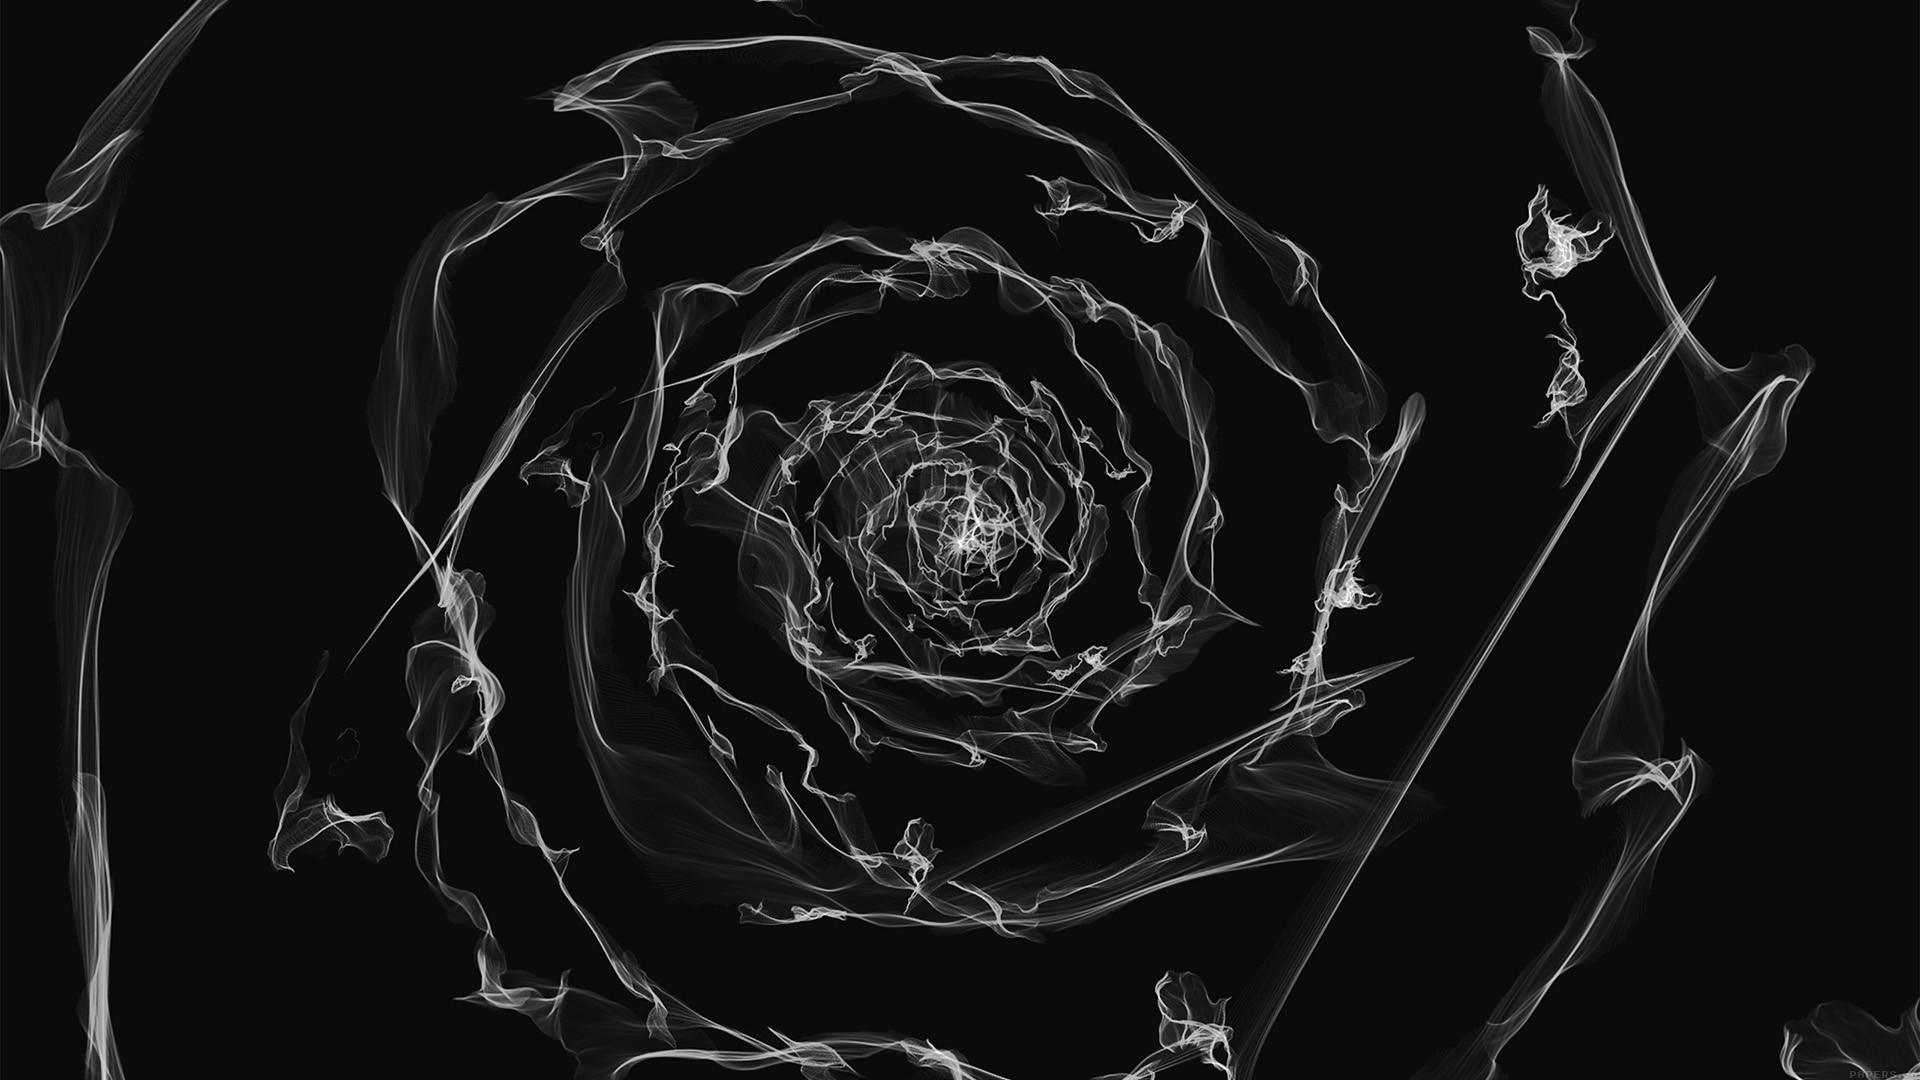 General 1920x1080 digital art minimalism smoke spiral black background abstract black monochrome